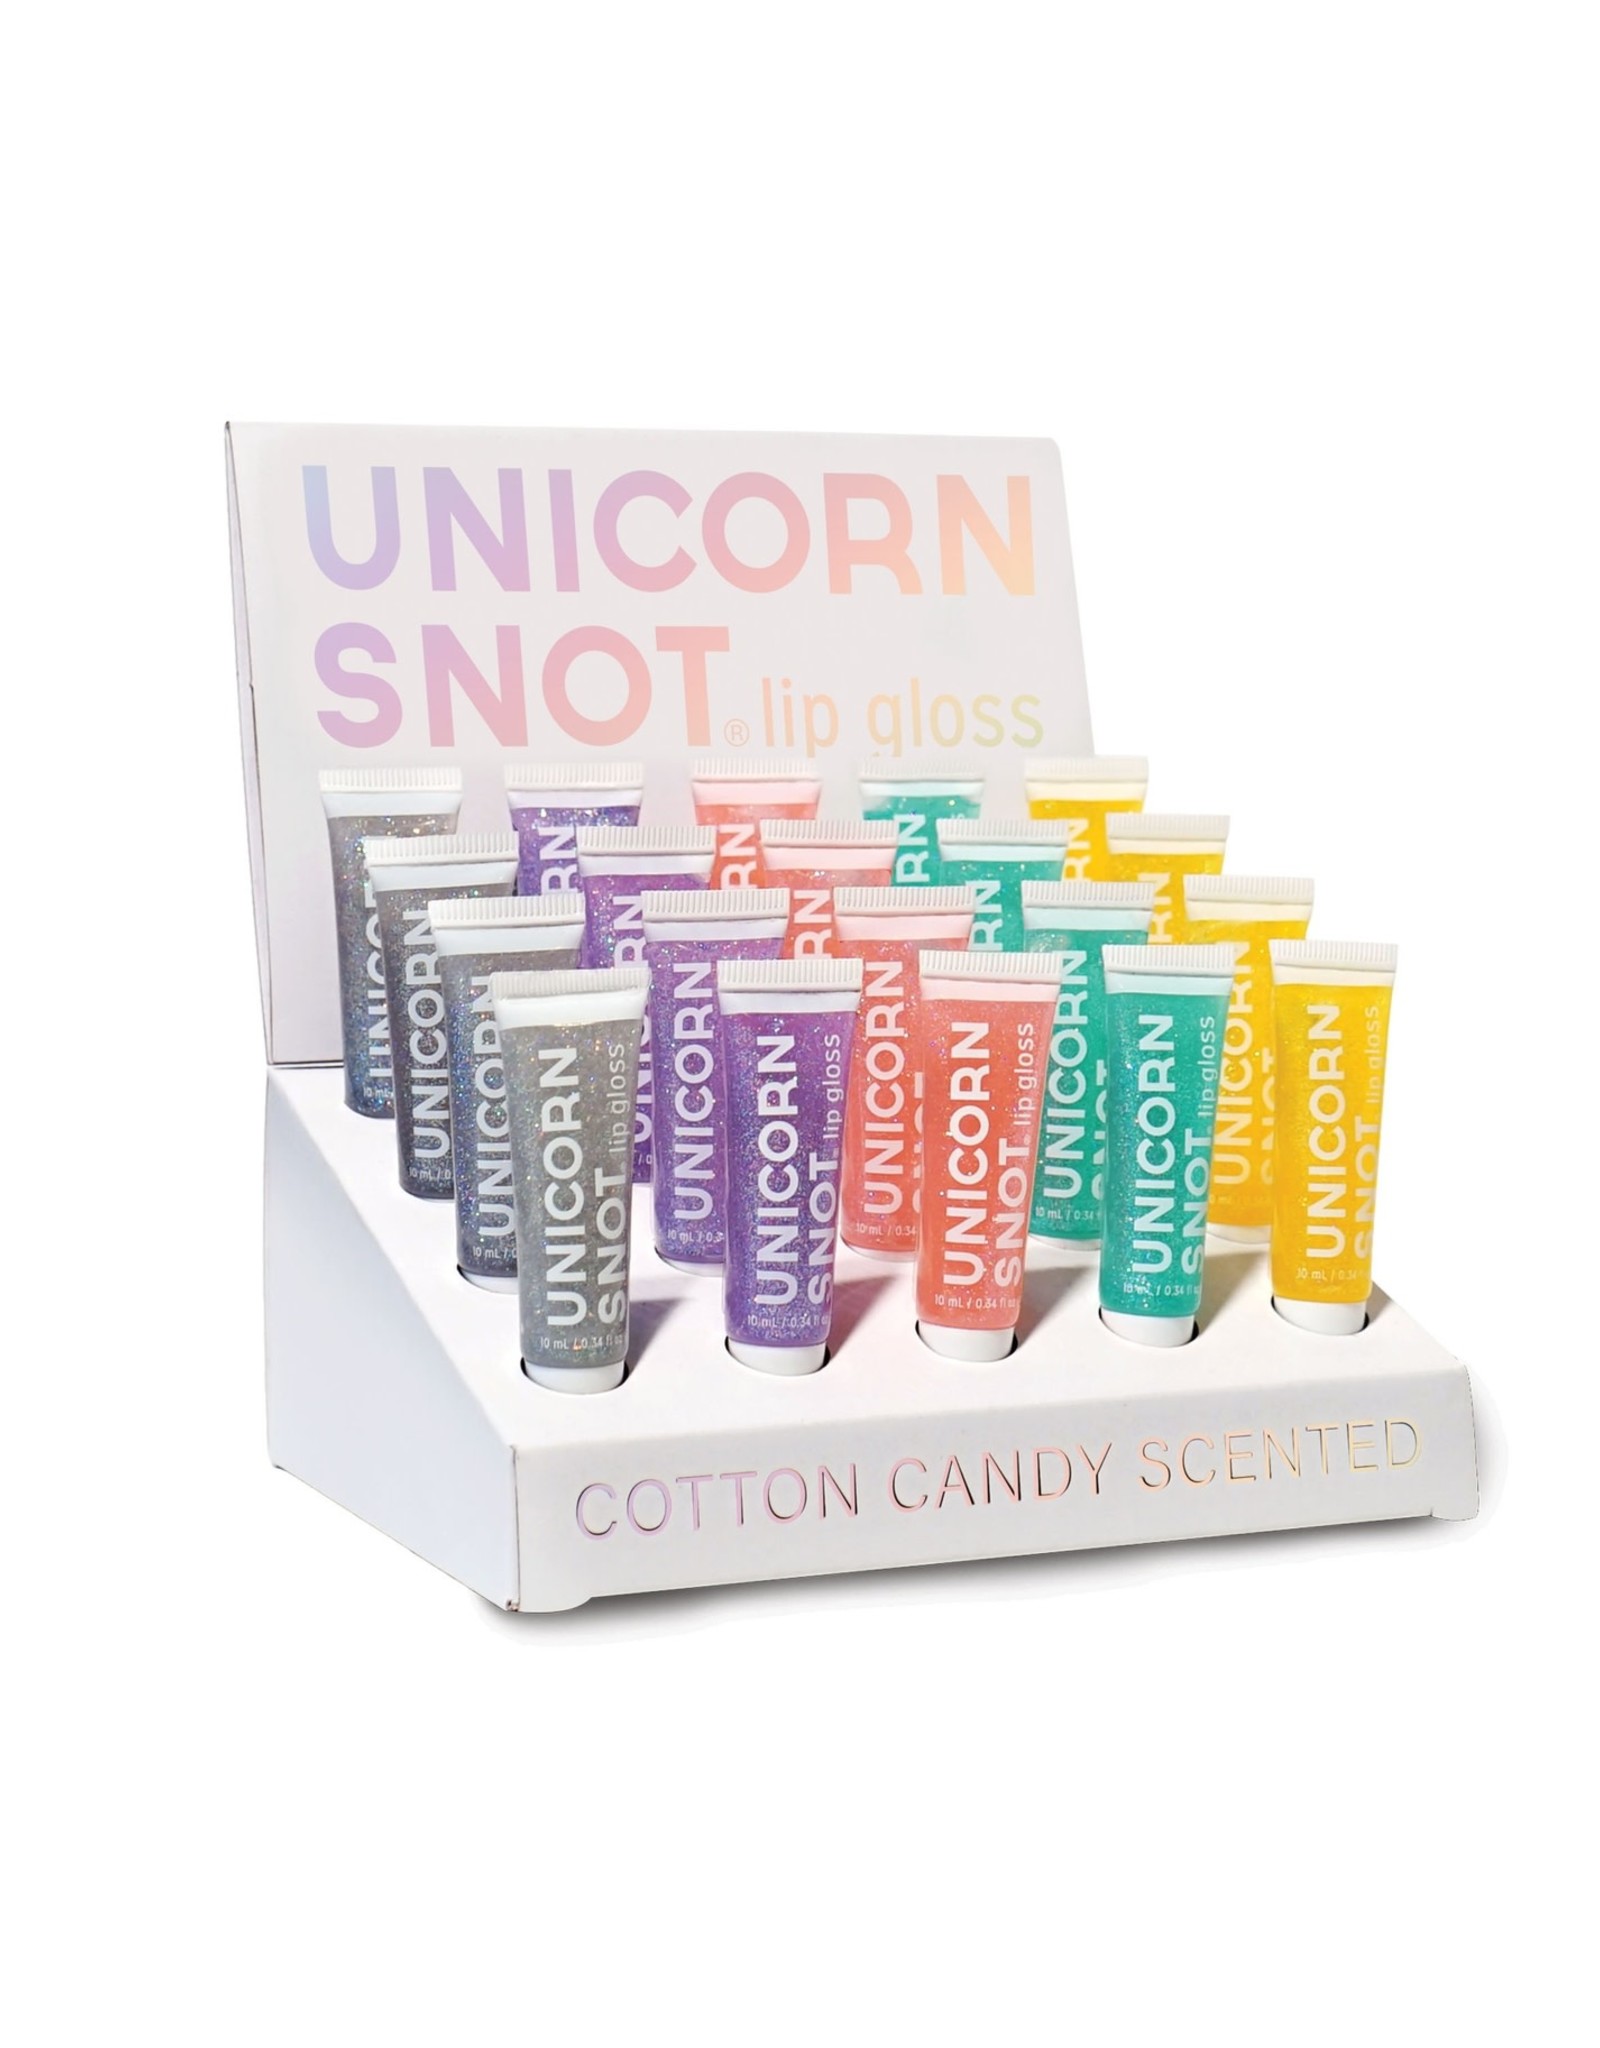 Unicorn Snot Lip Gloss - Cotton Candy Scented